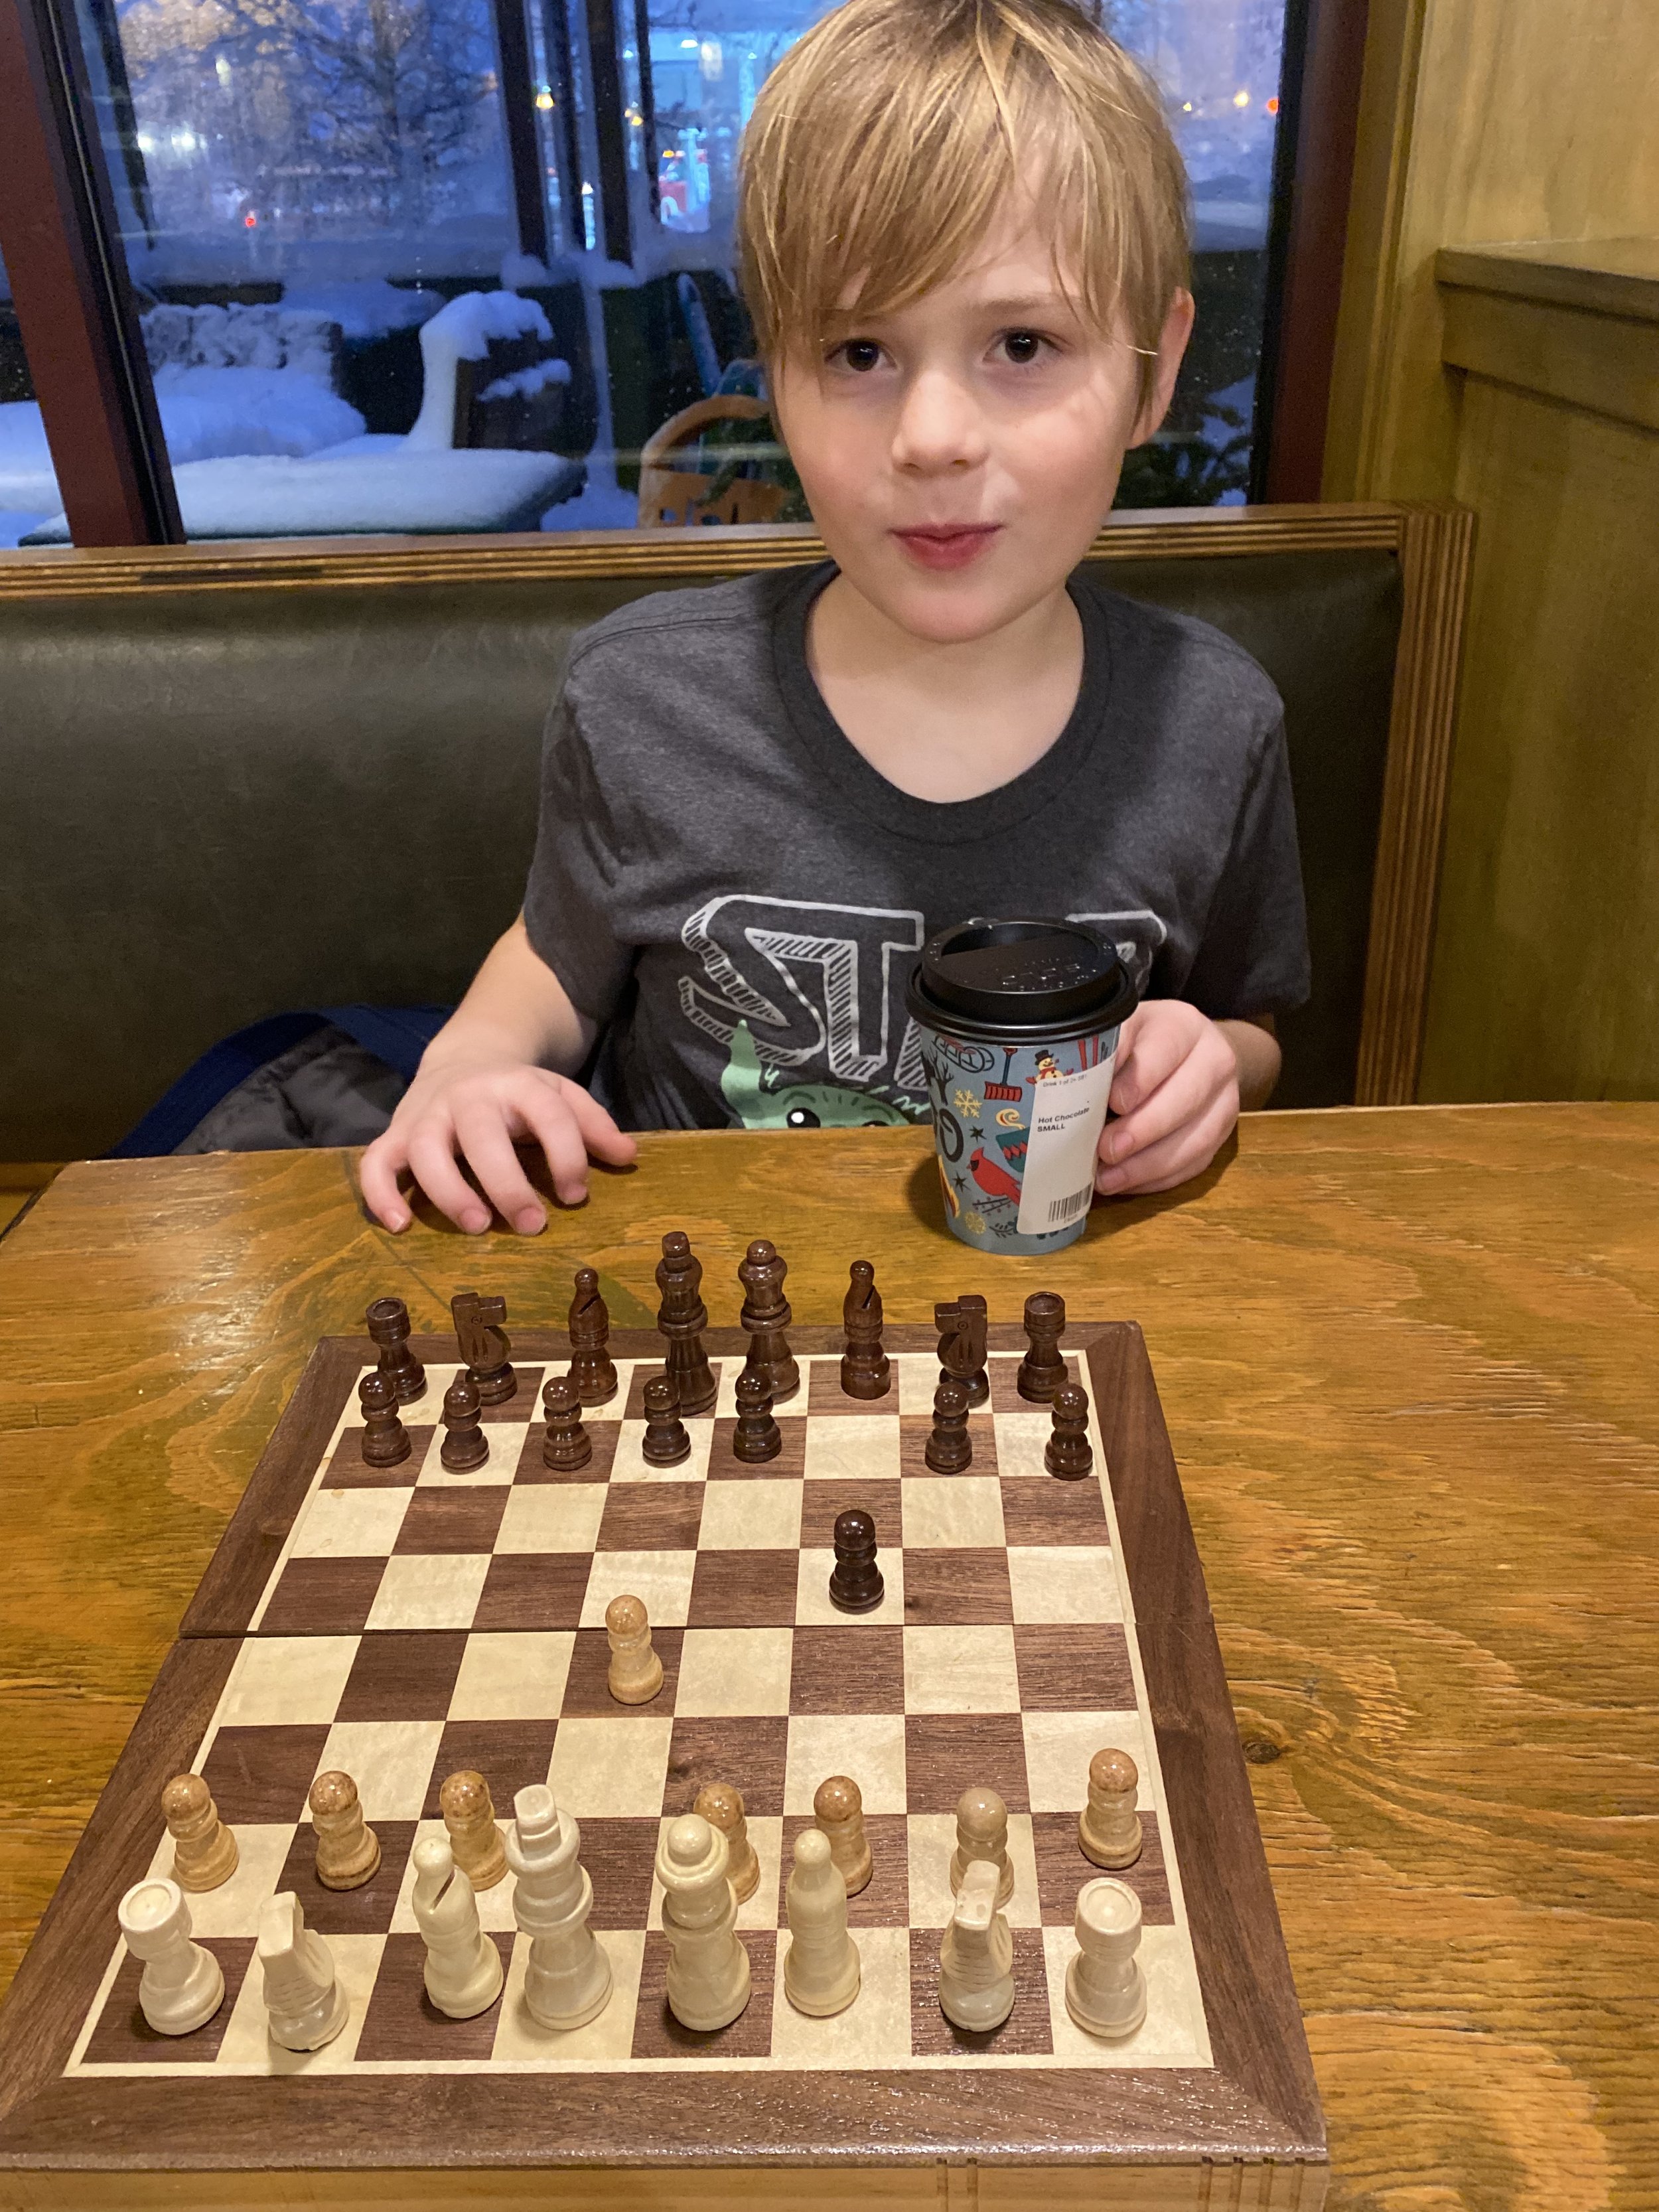 Judah the Chess Master